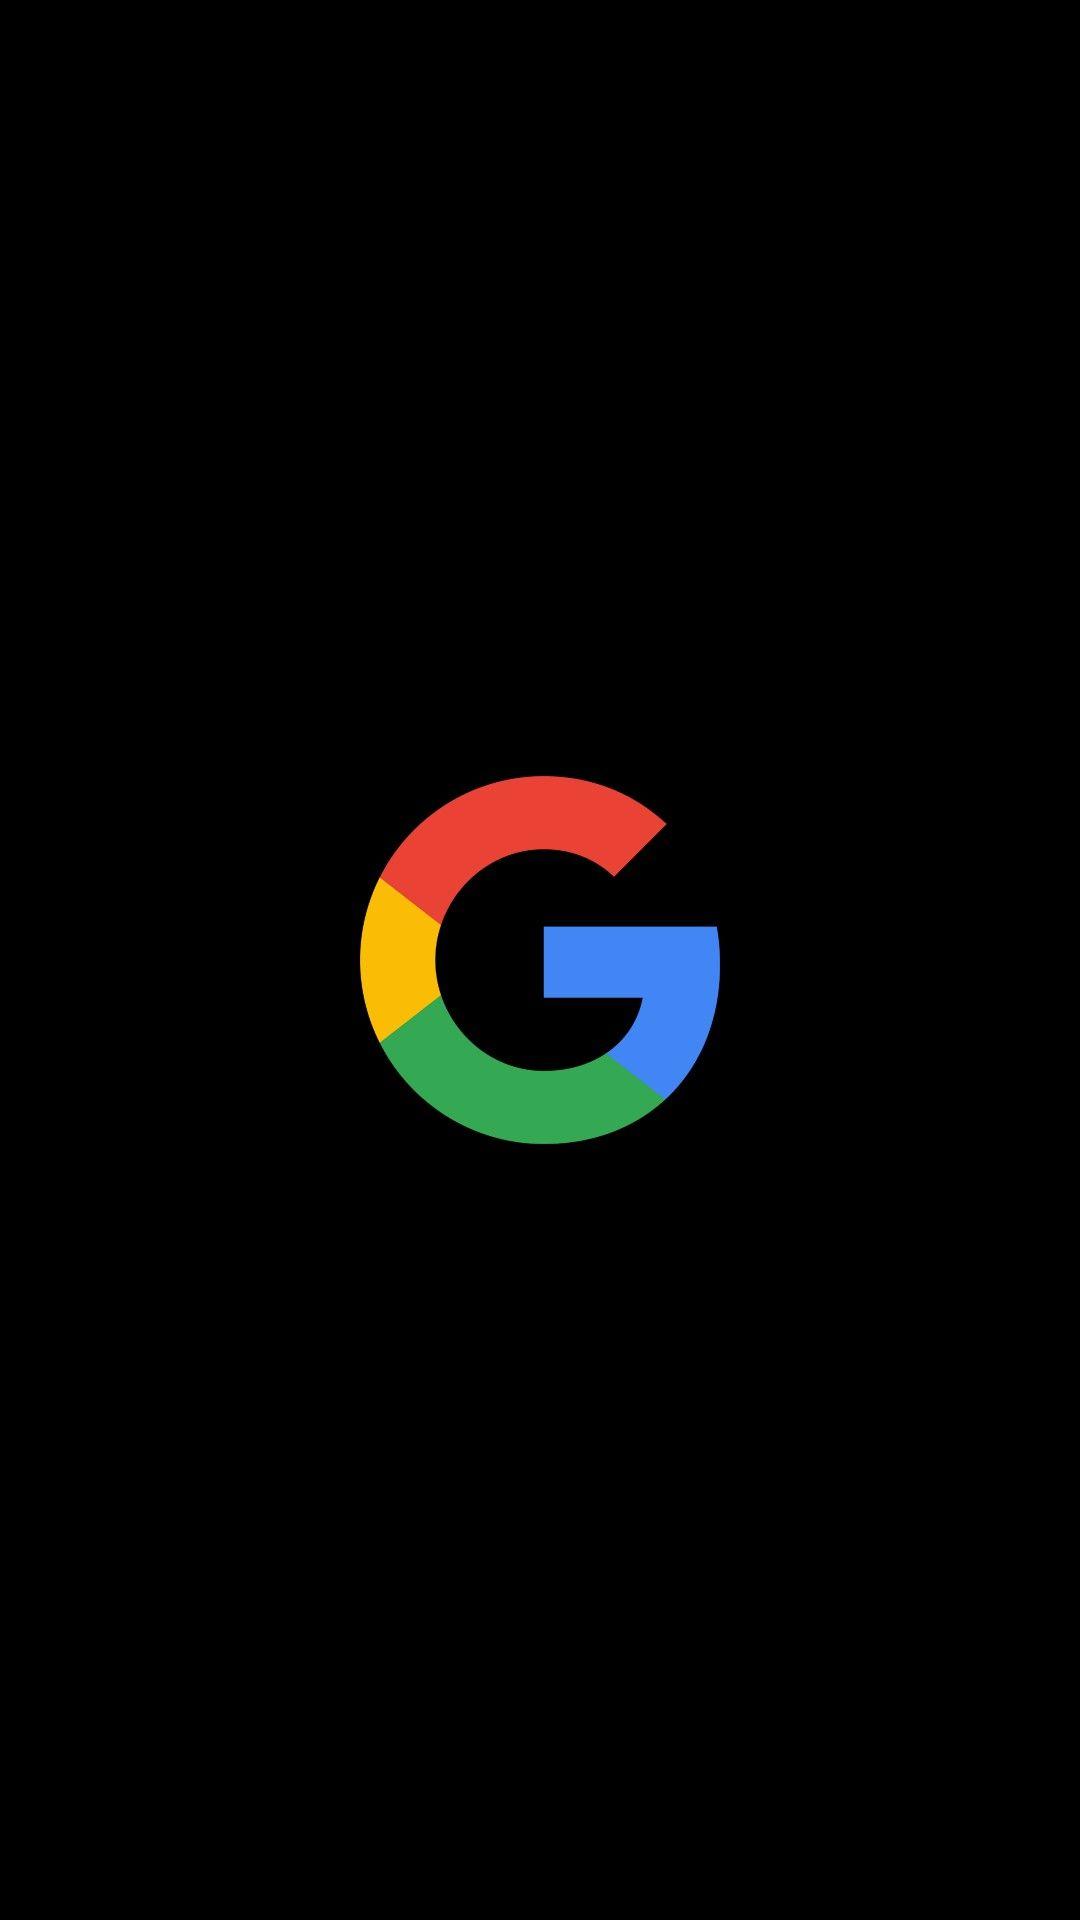 Google Logo Wallpapers For Mobile Wallpaper Cave